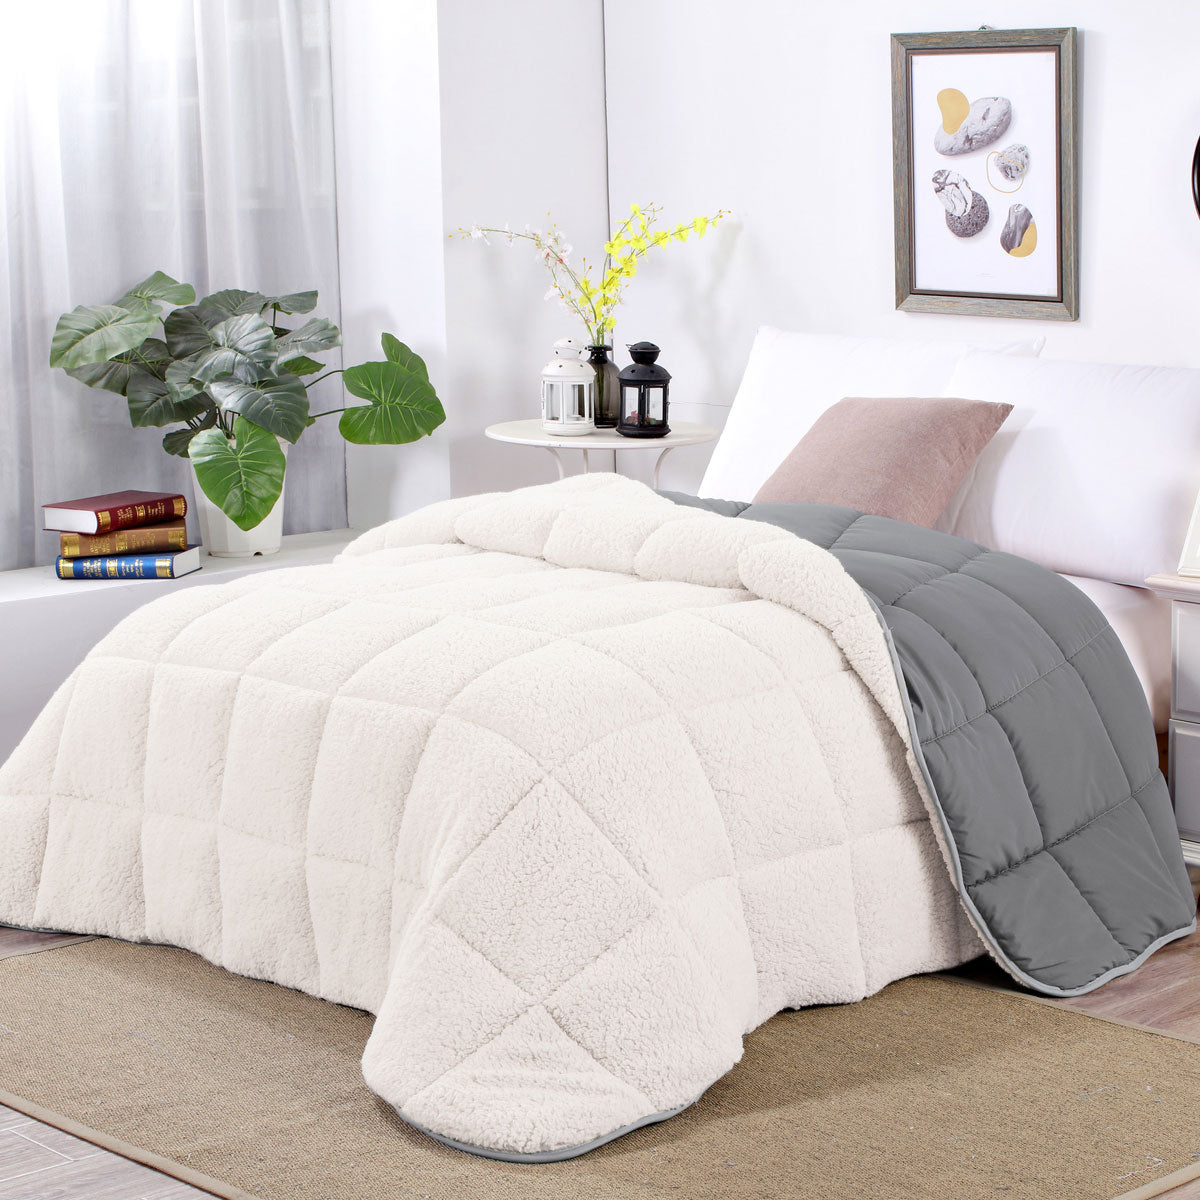 Double Shangri La Sleet Sherpa Fleece Reversible 3 Pcs Comforter Set - White/Grey